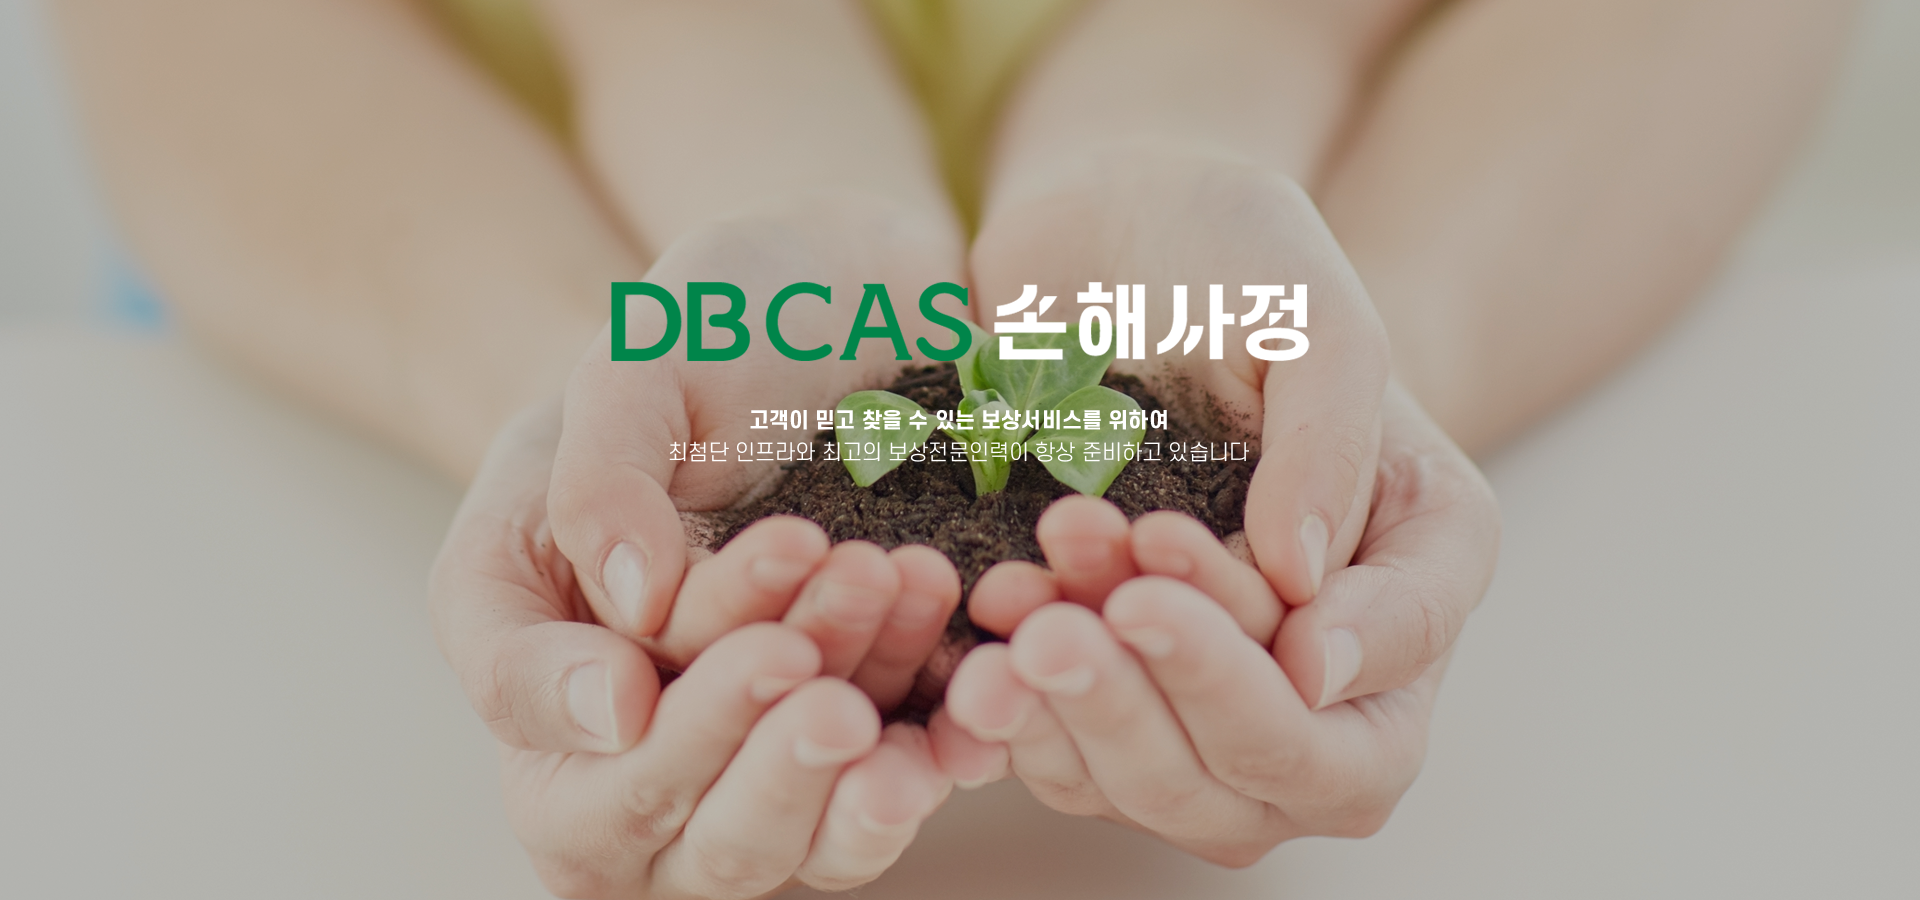 DBCAS손해사정 : 고객이 믿고 찾을 수 있는 보상서비스를 위하여 최첨단 인프라와 최고의 보상전문인력이 항상 준비하고 있습니다.